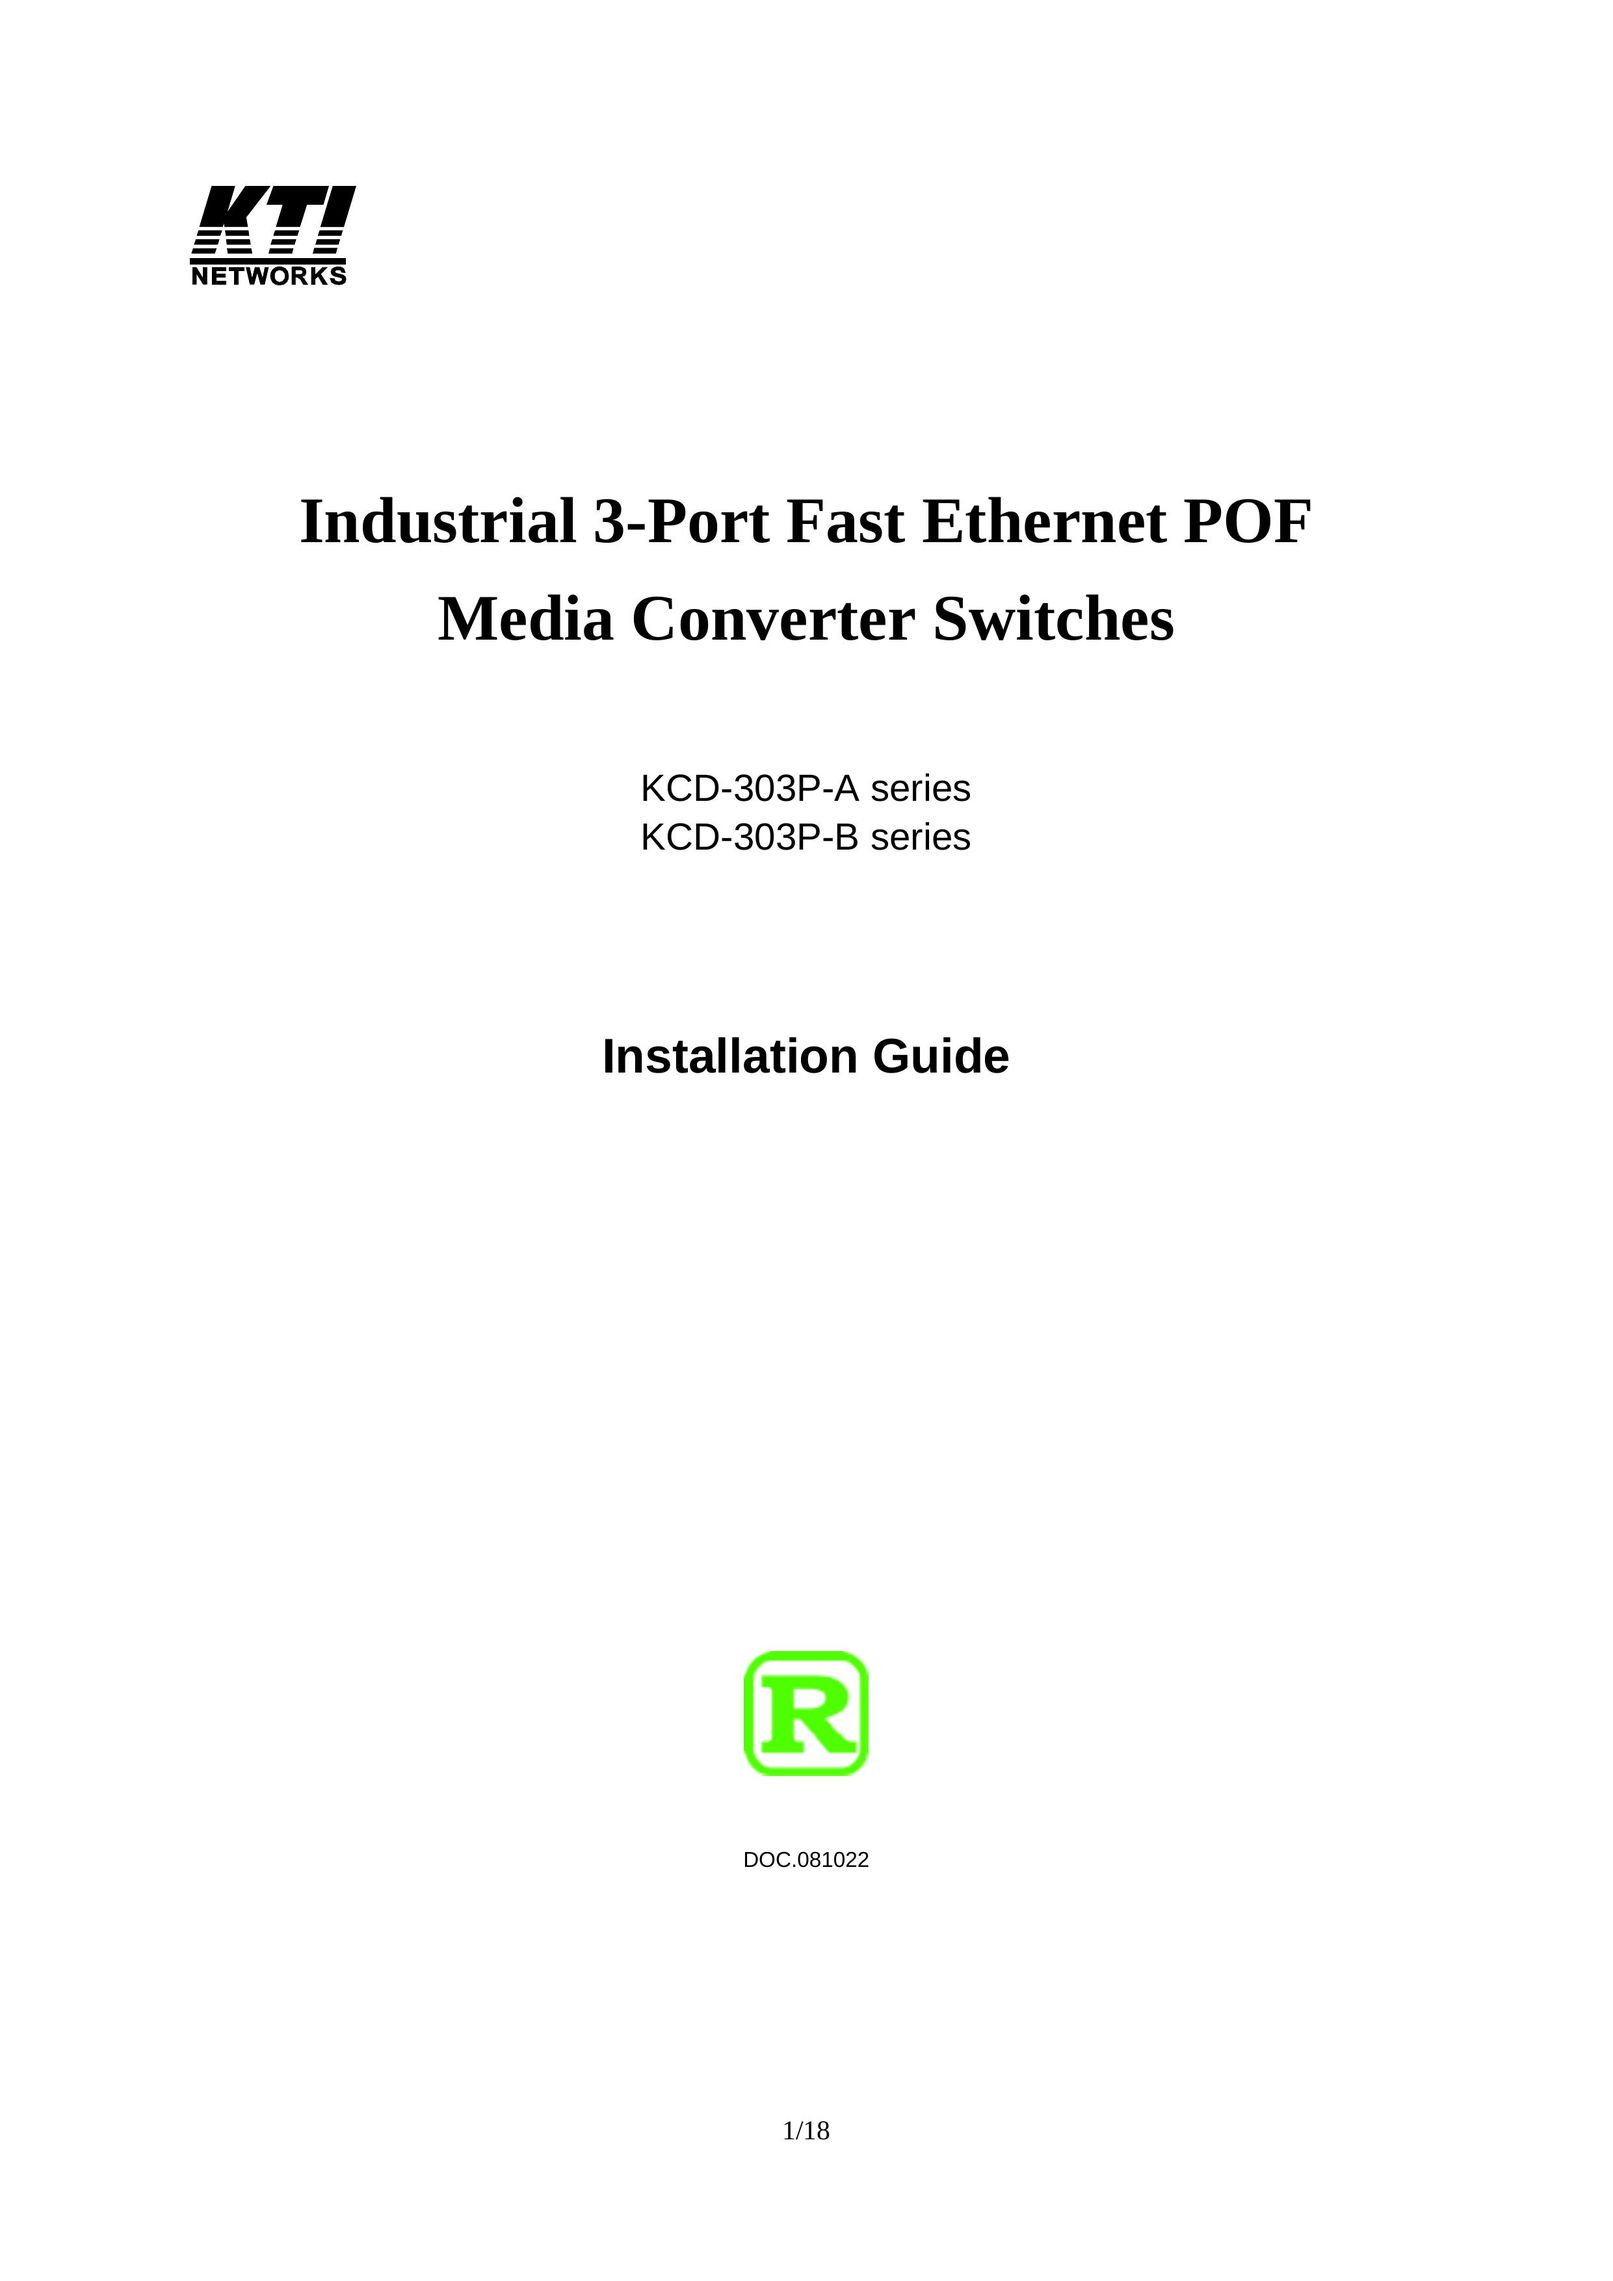 KTI Networks KCD-303P-B2 Switch User Manual